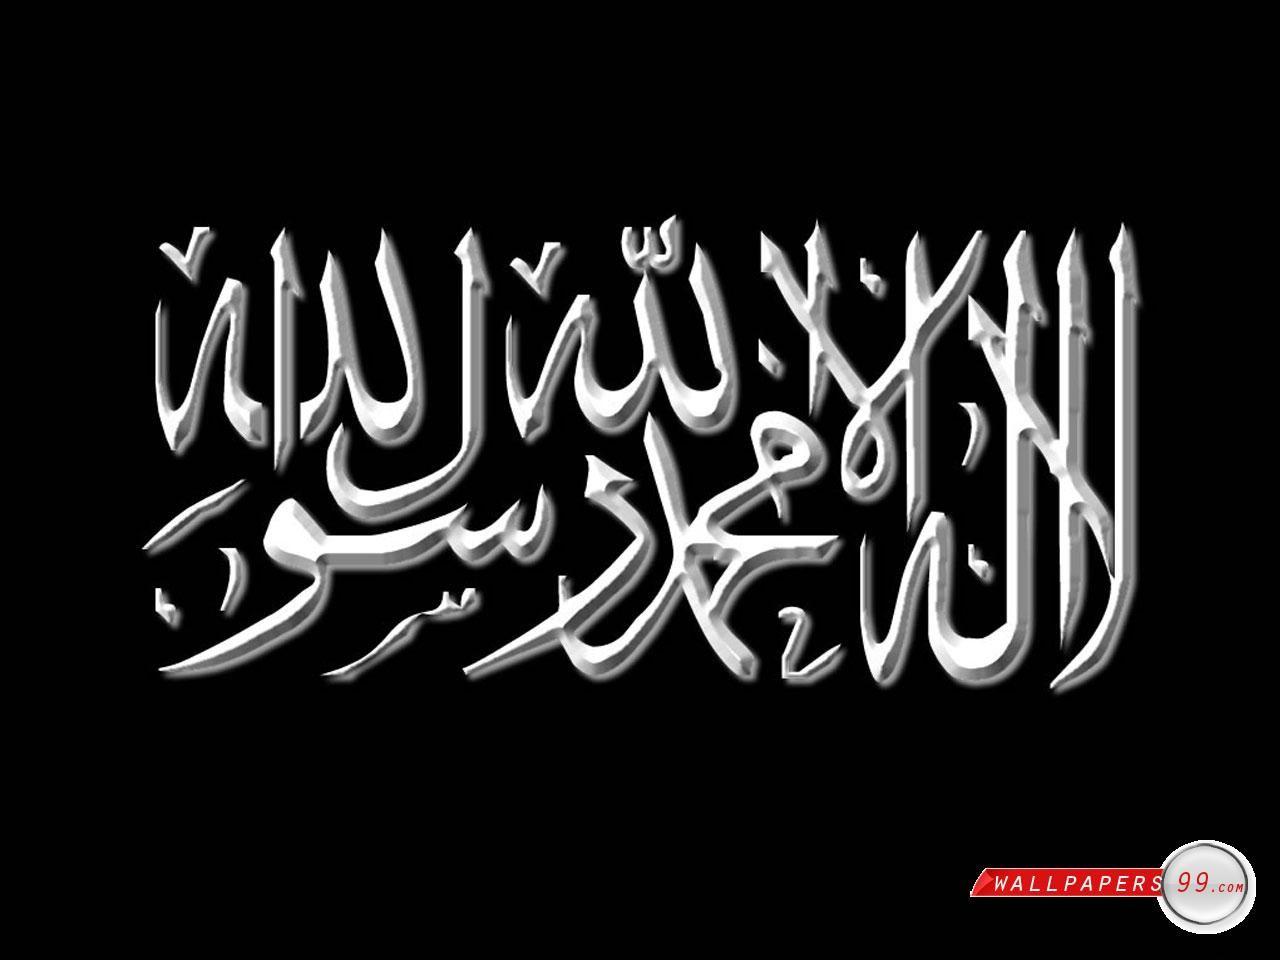 Allah Name wallpaper by asadrauf0098  Download on ZEDGE  bd2b